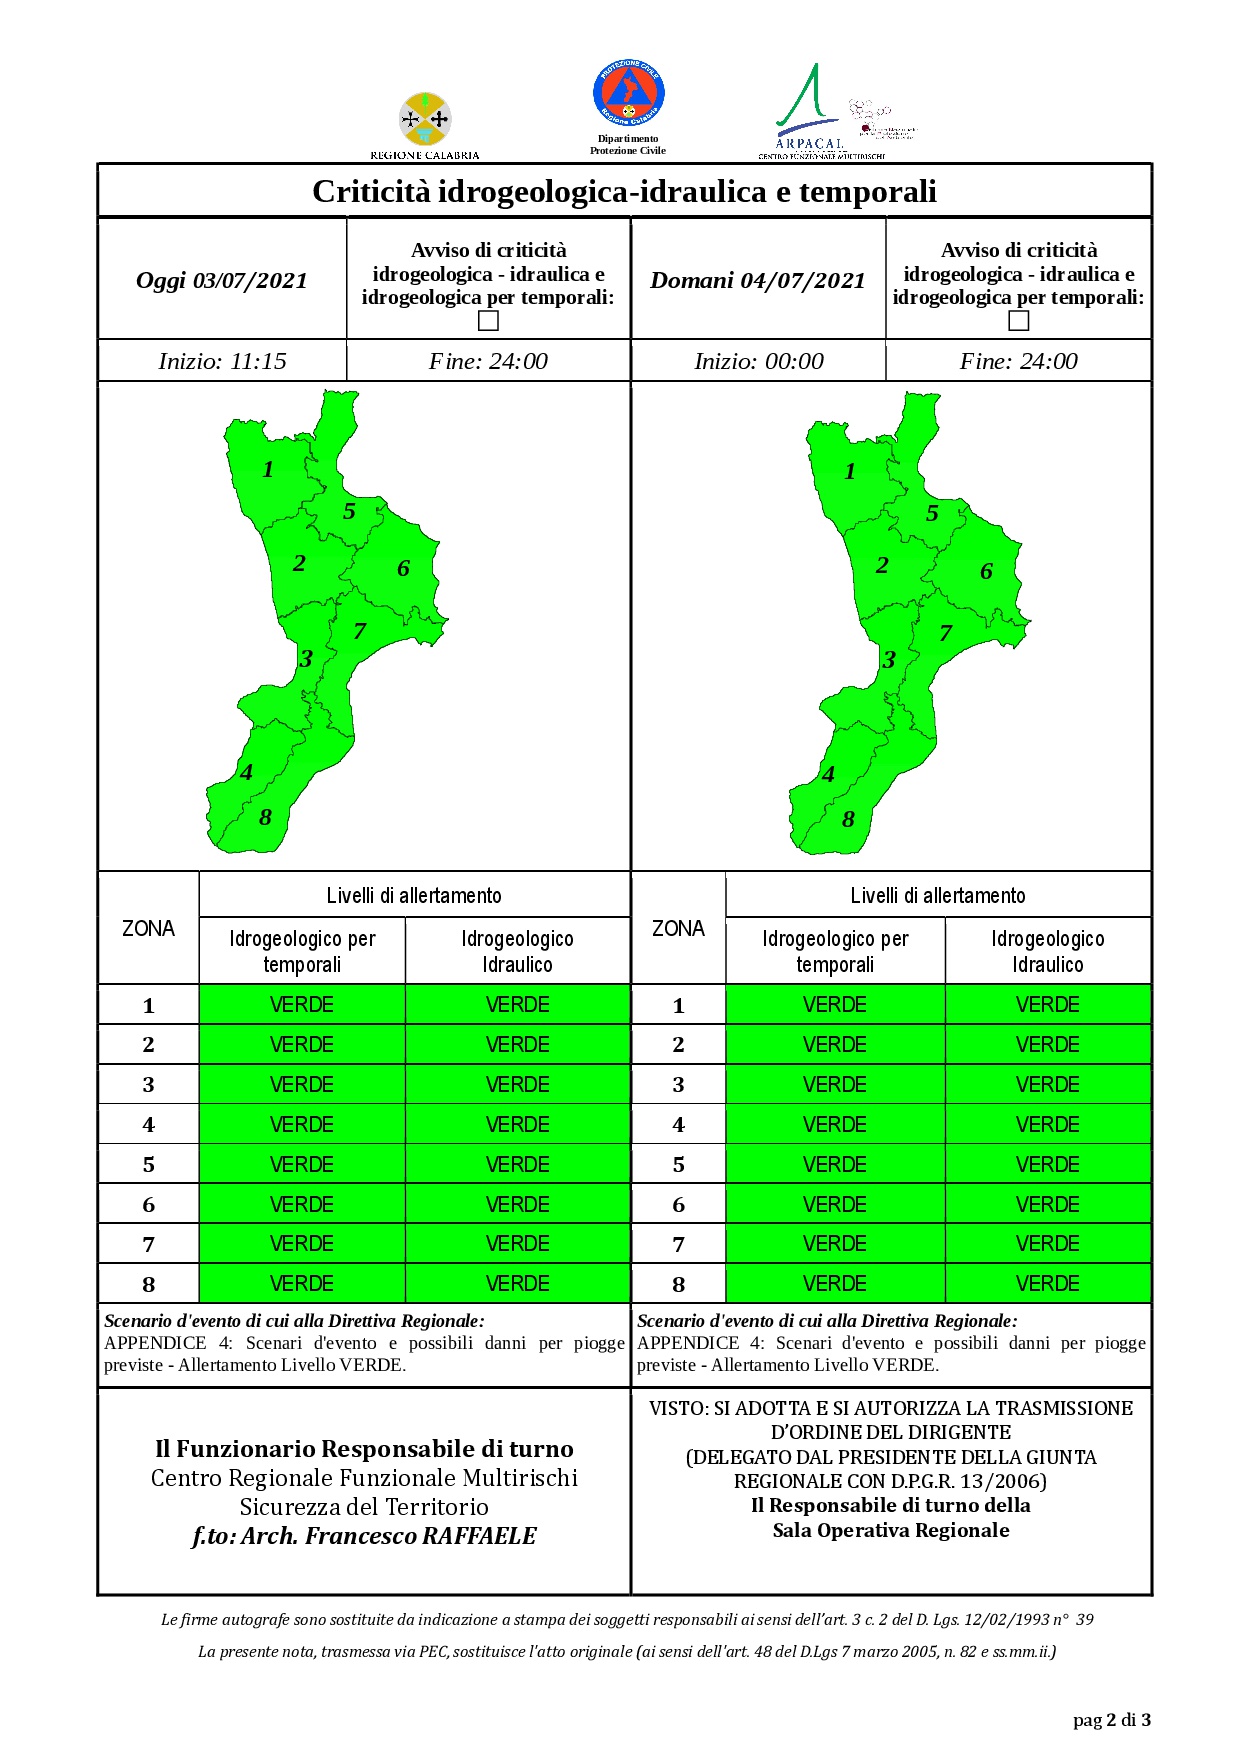 Criticità idrogeologica-idraulica e temporali in Calabria 03-07-2021